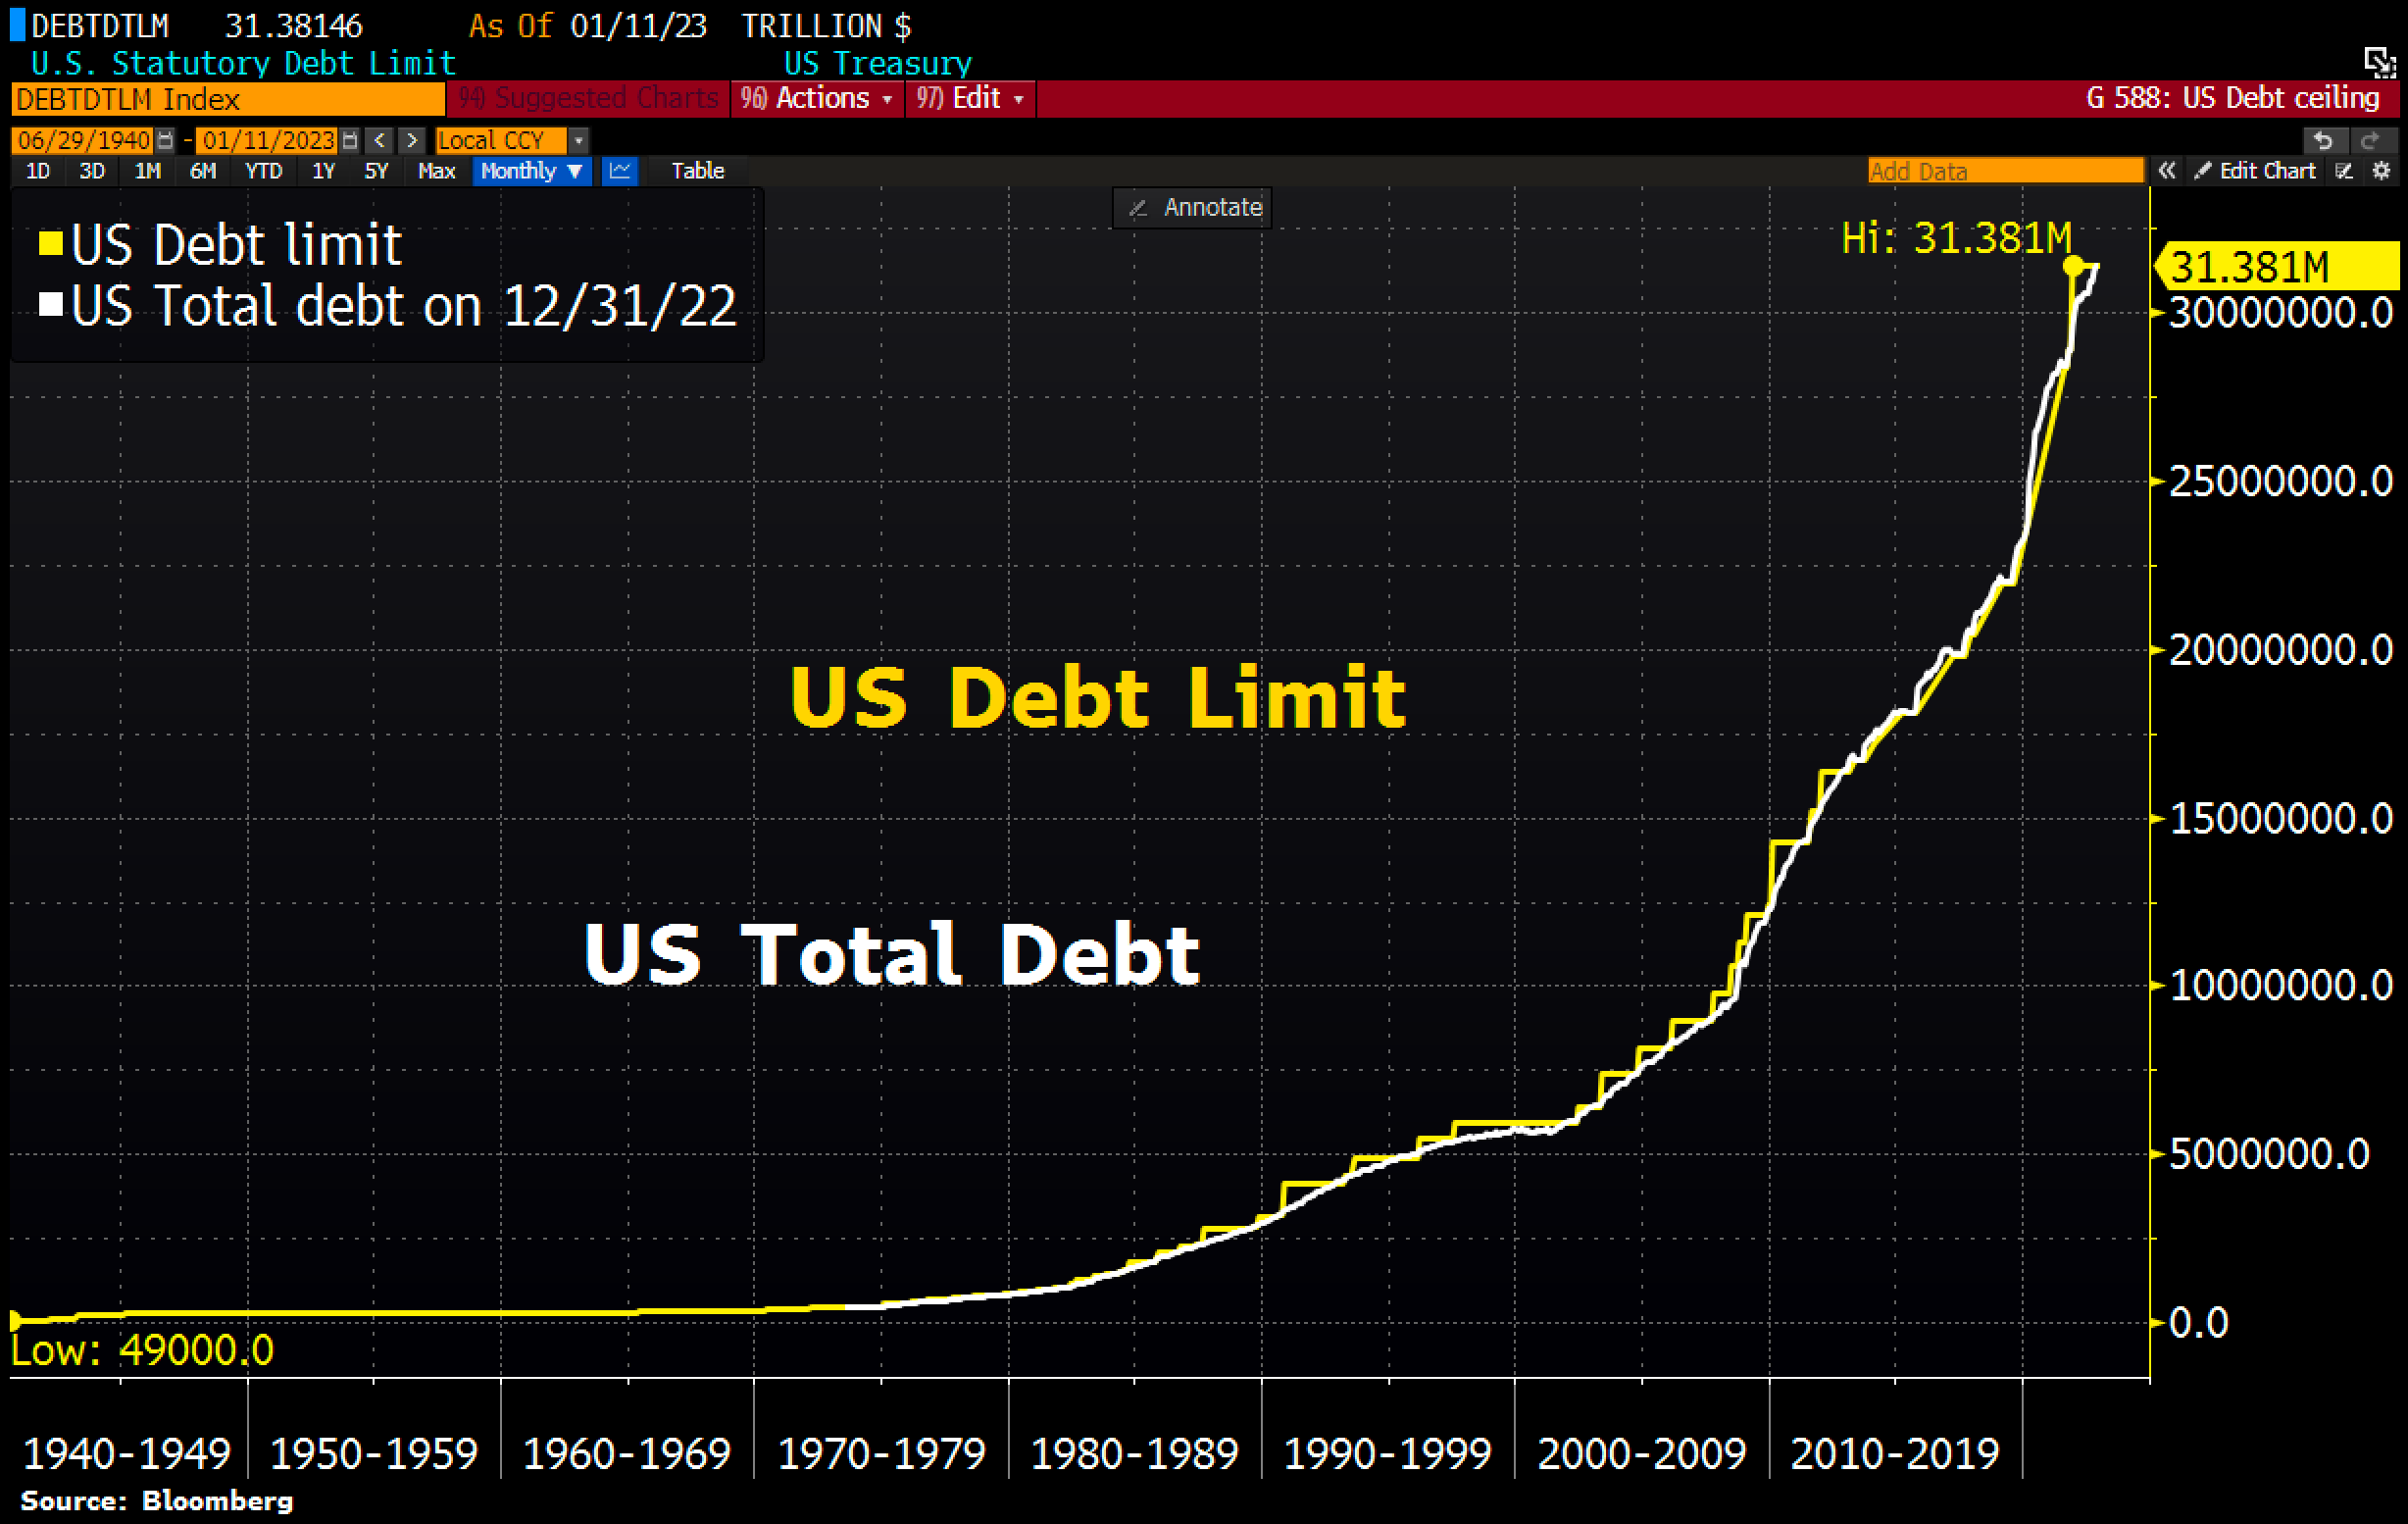 US will hit its debt limit Thursday, start taking steps to avoid default, Yellen warns Congress